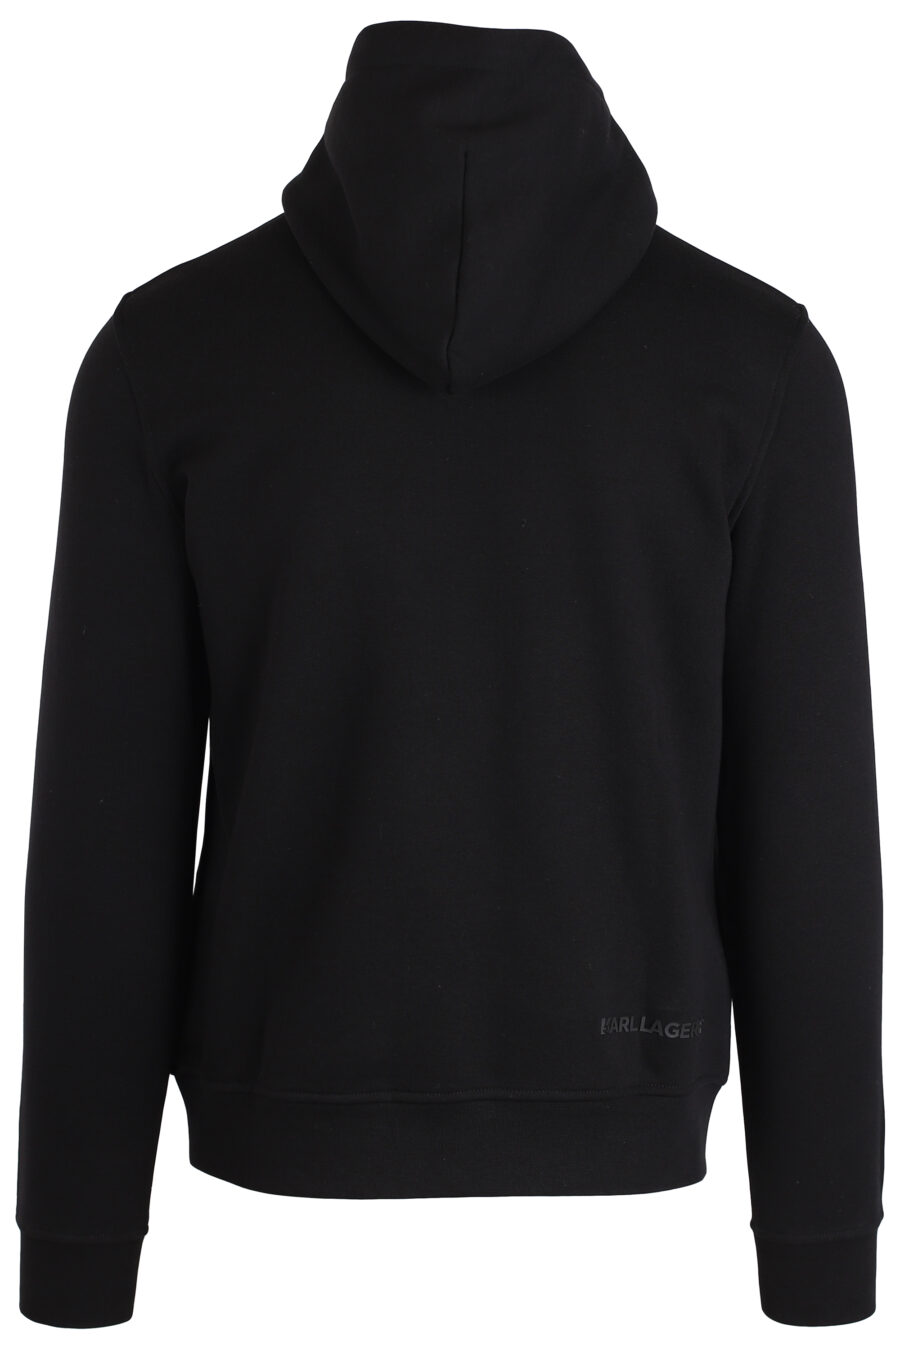 Black hooded sweatshirt with gold logo at waist - IMG 3974